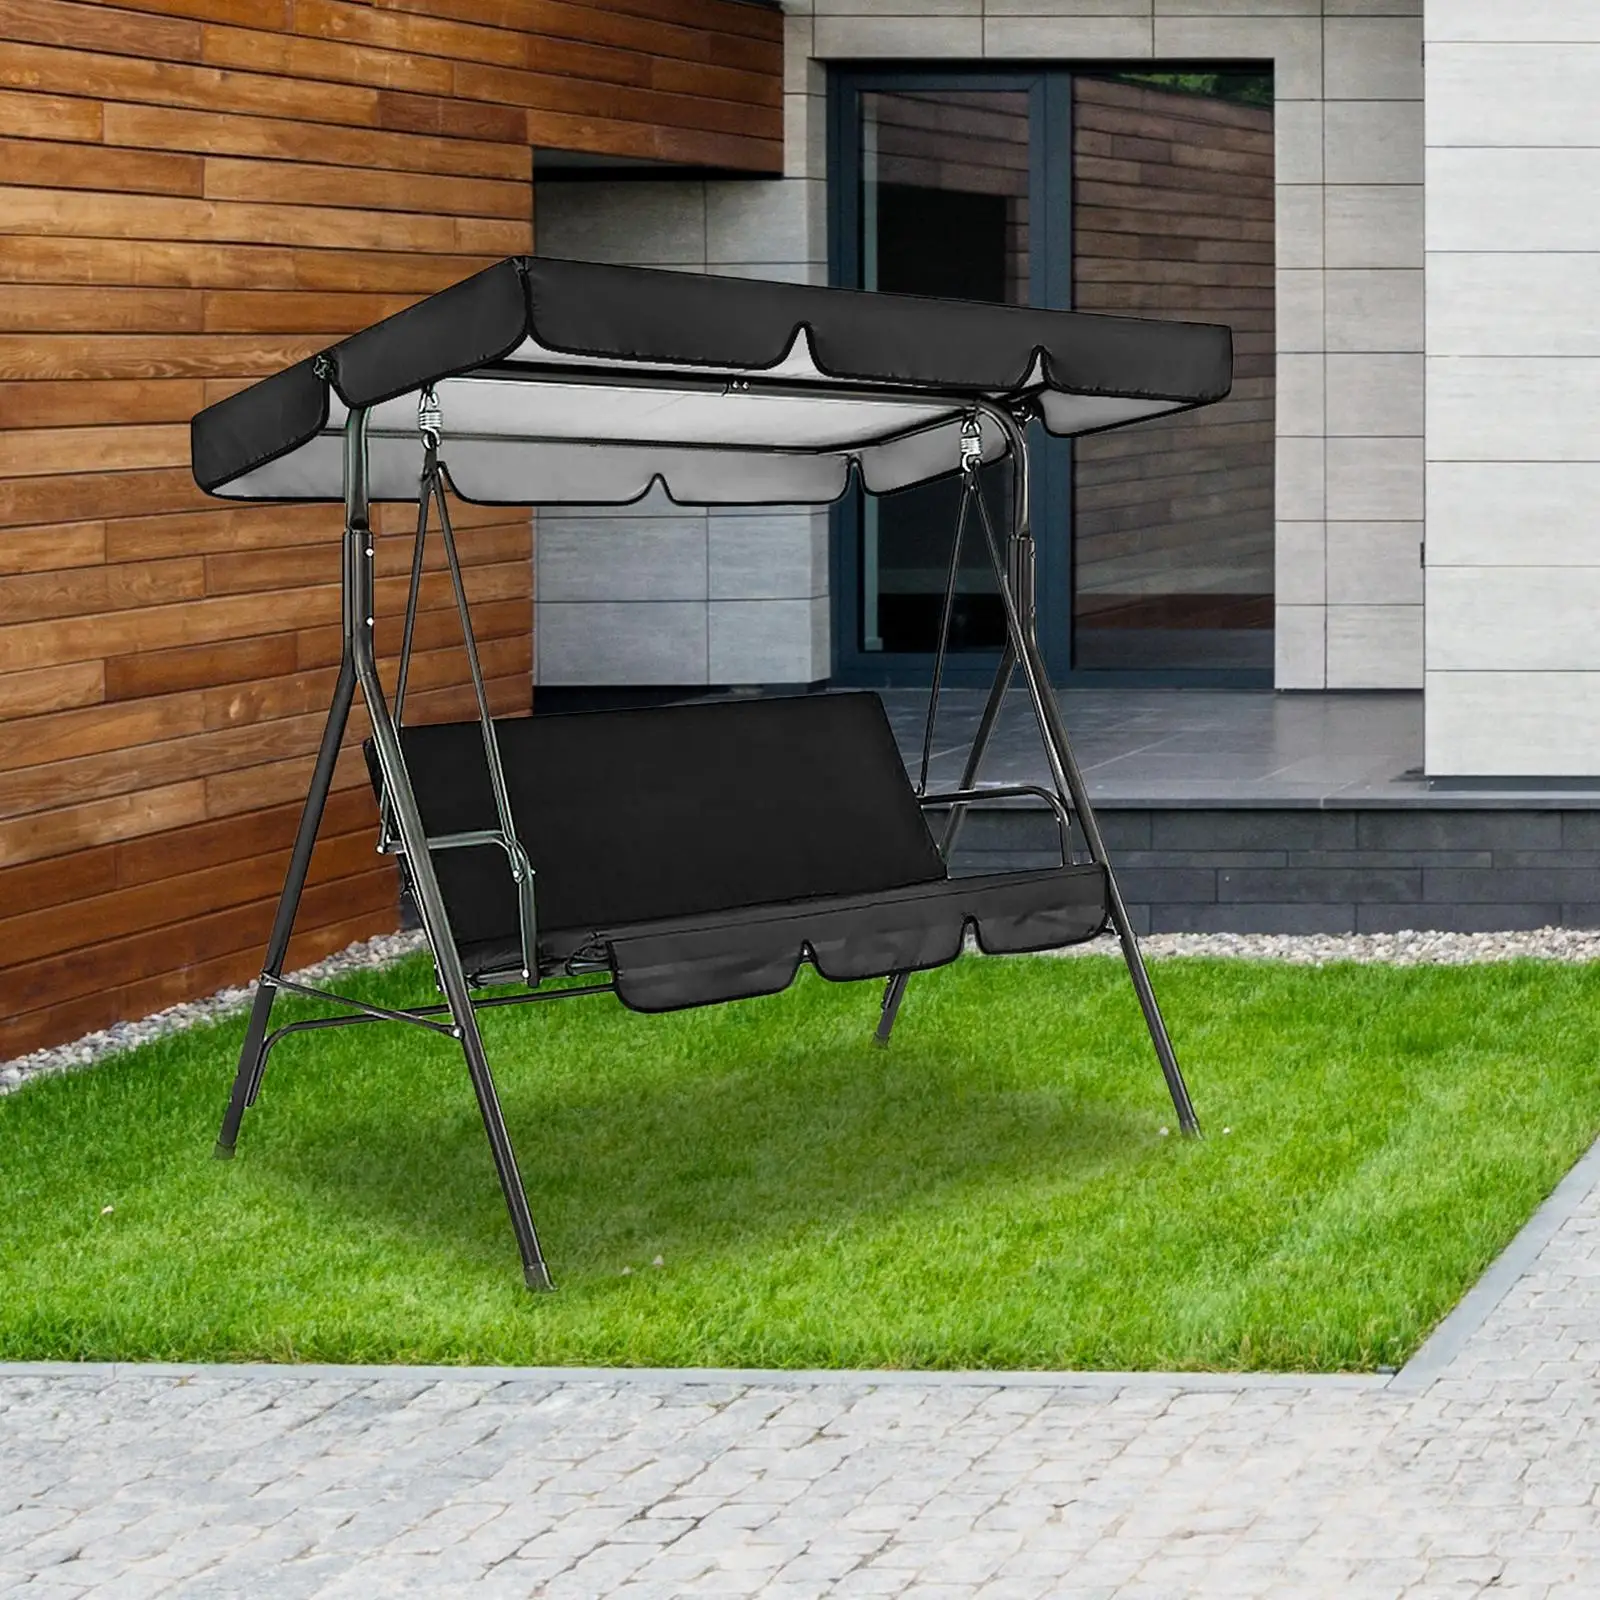 Patio Swing Canopy Garden Hammock Top Cover Rainproof Garden Swing Chair Cover for Furniture Porch Seat Canopy Garden Outdoor